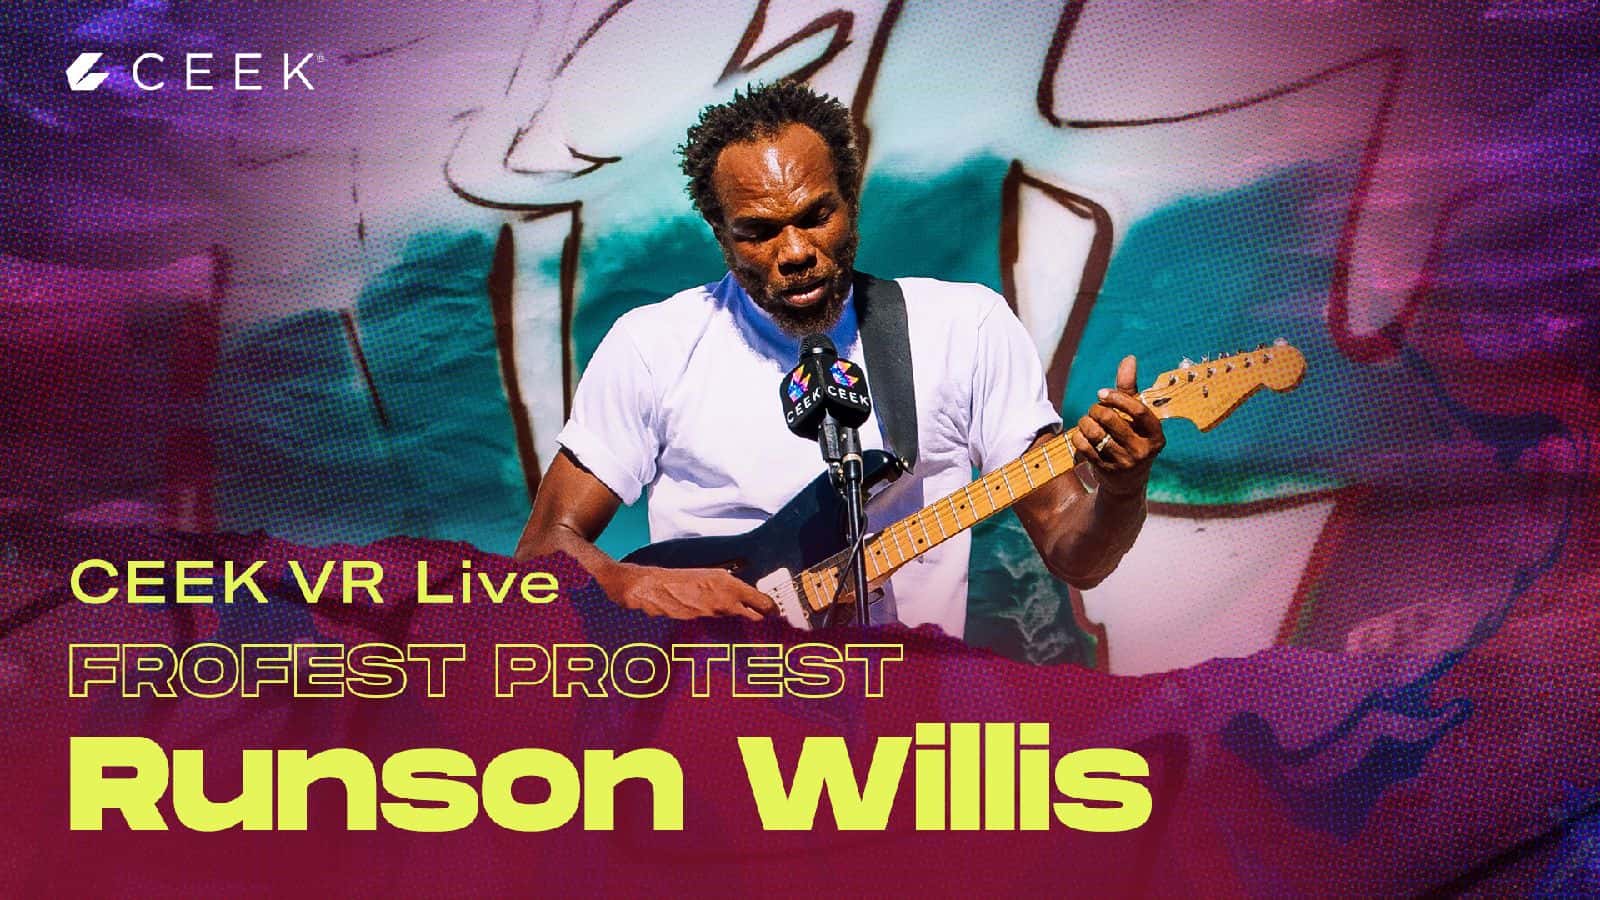 FROFEST Runson Willis Live